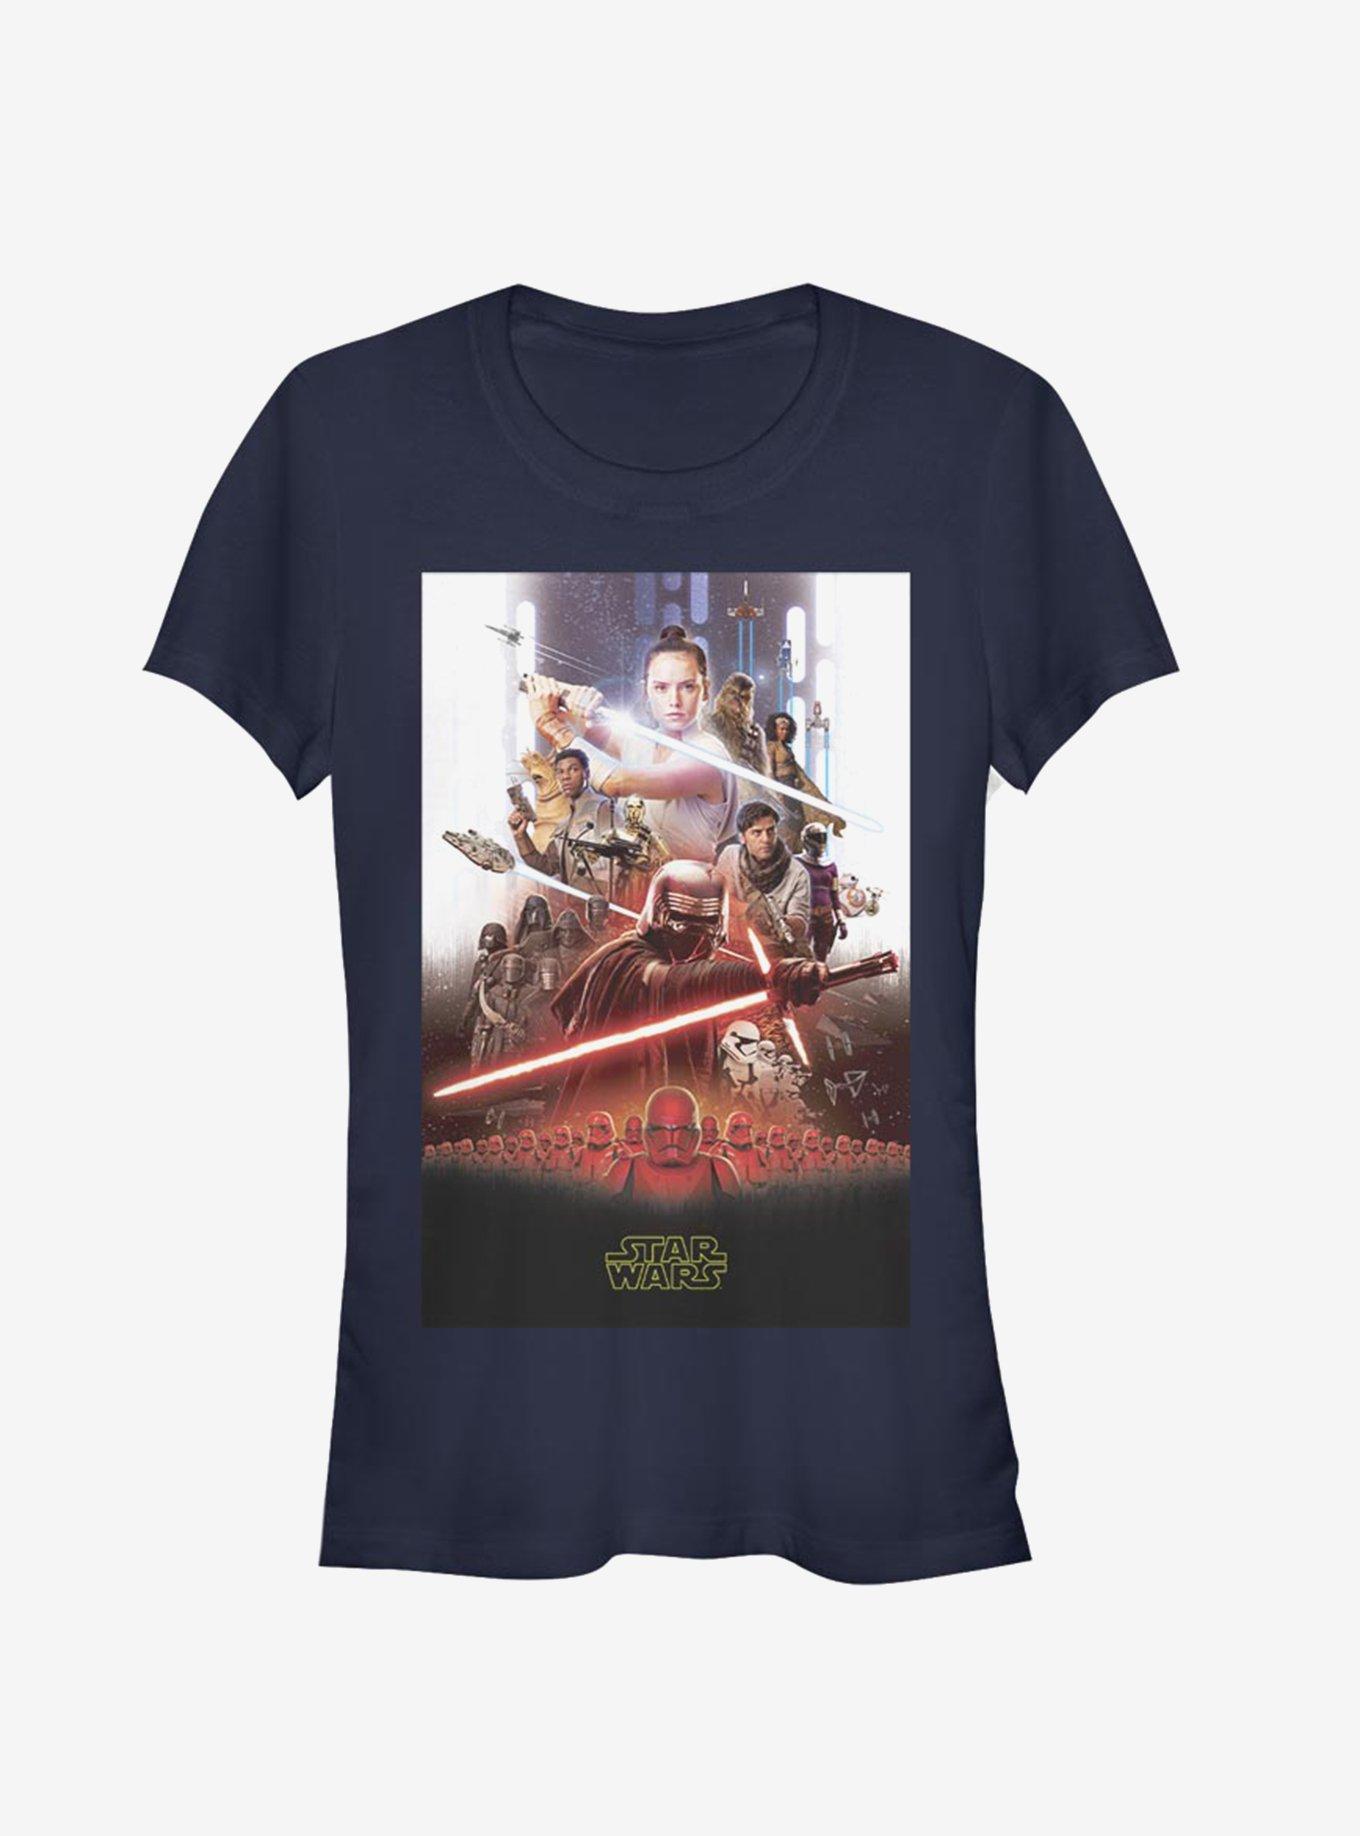 Star Wars Episode IX The Rise Of Skywalker Last Poster Girls T-Shirt